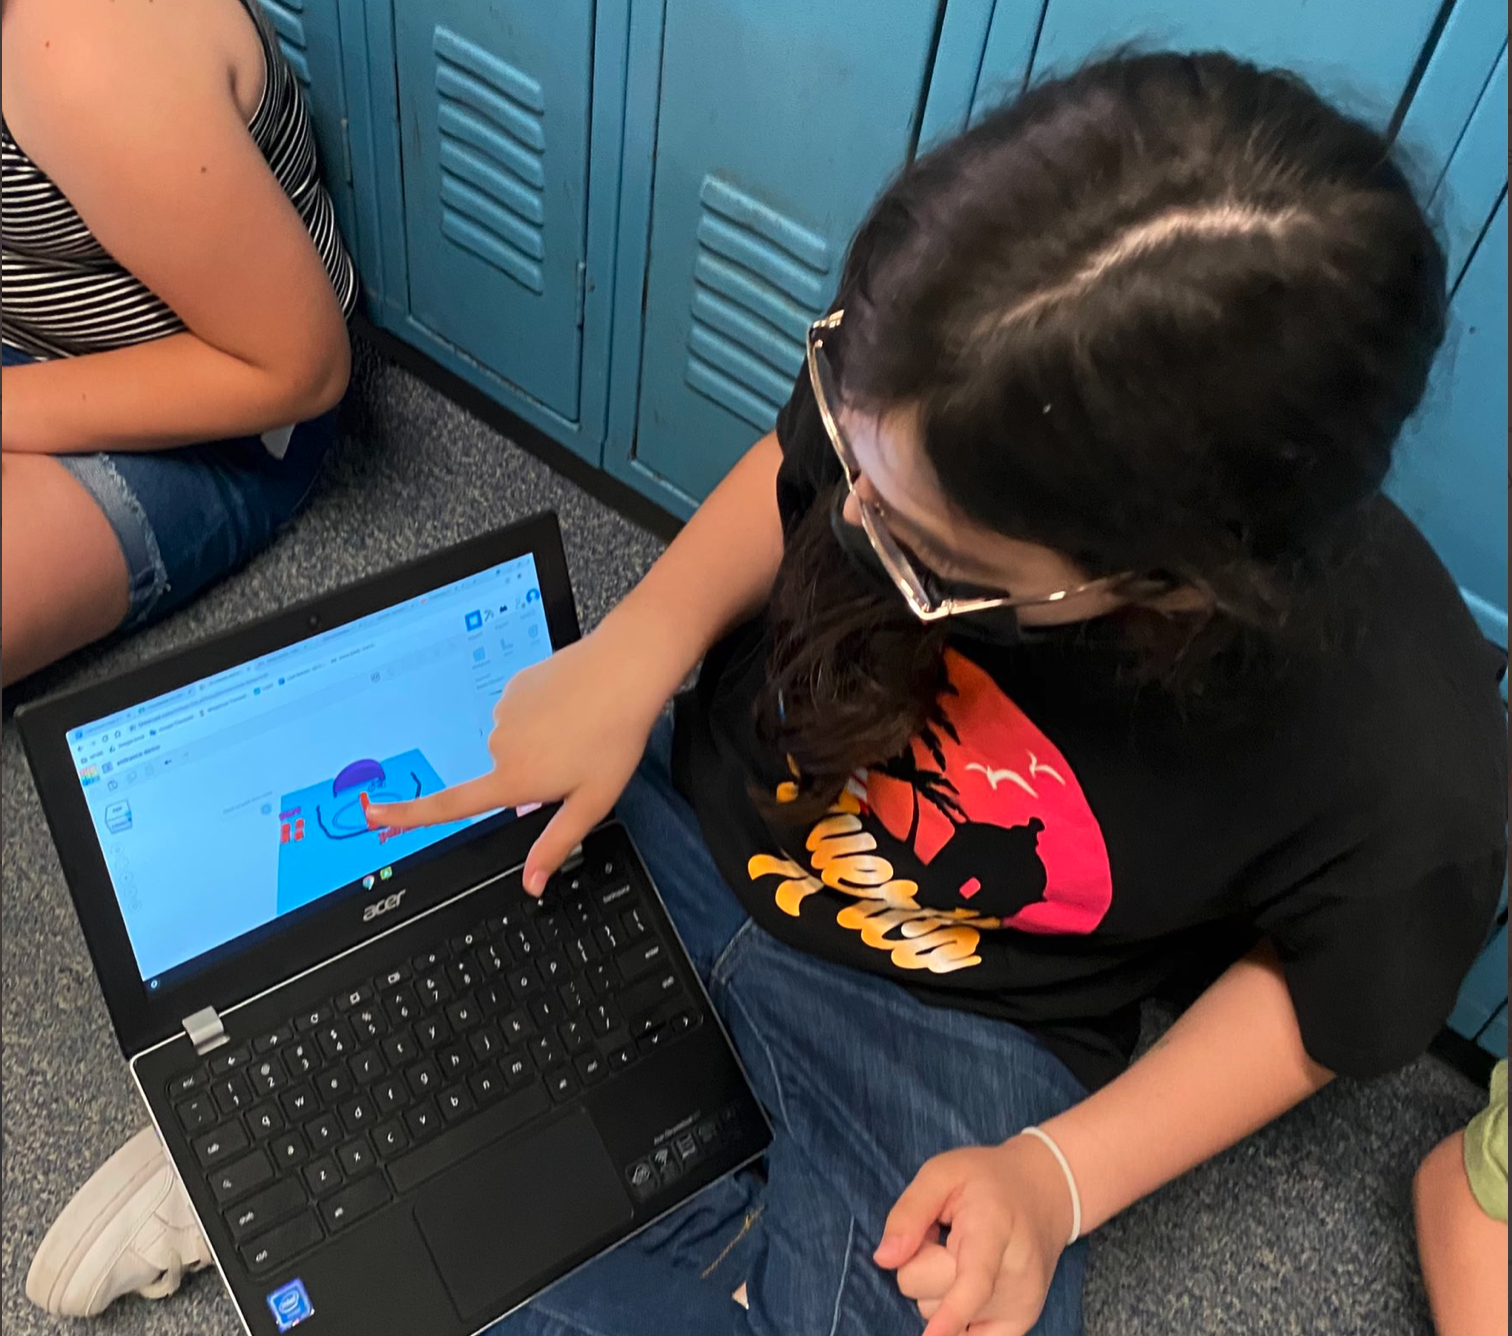 Student demonstrating learning on her Chromebook